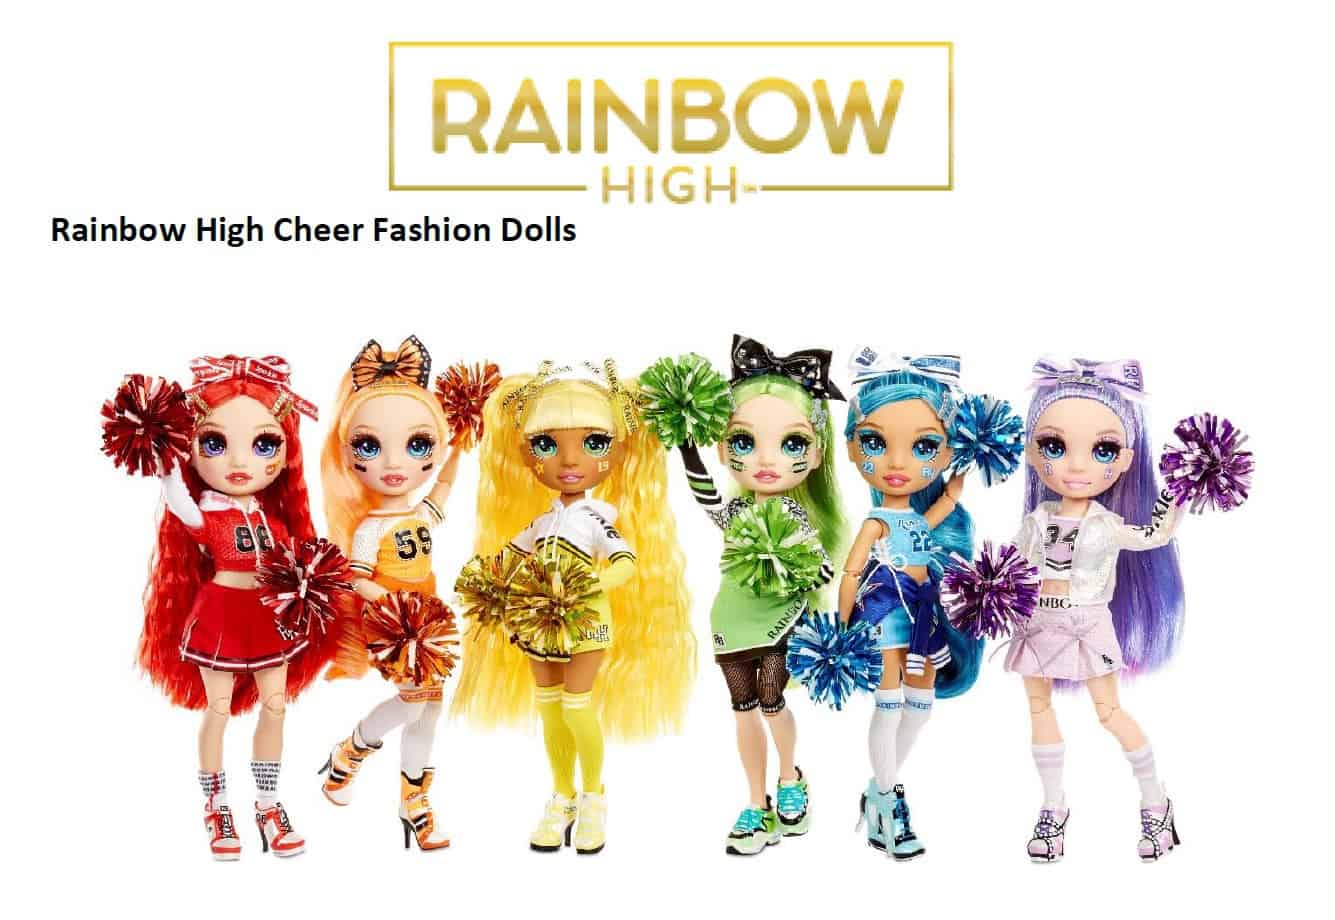 Rainbow High Cheer Fashion Doll Pom Poms & Cheerleader Doll Luxury Outfits 